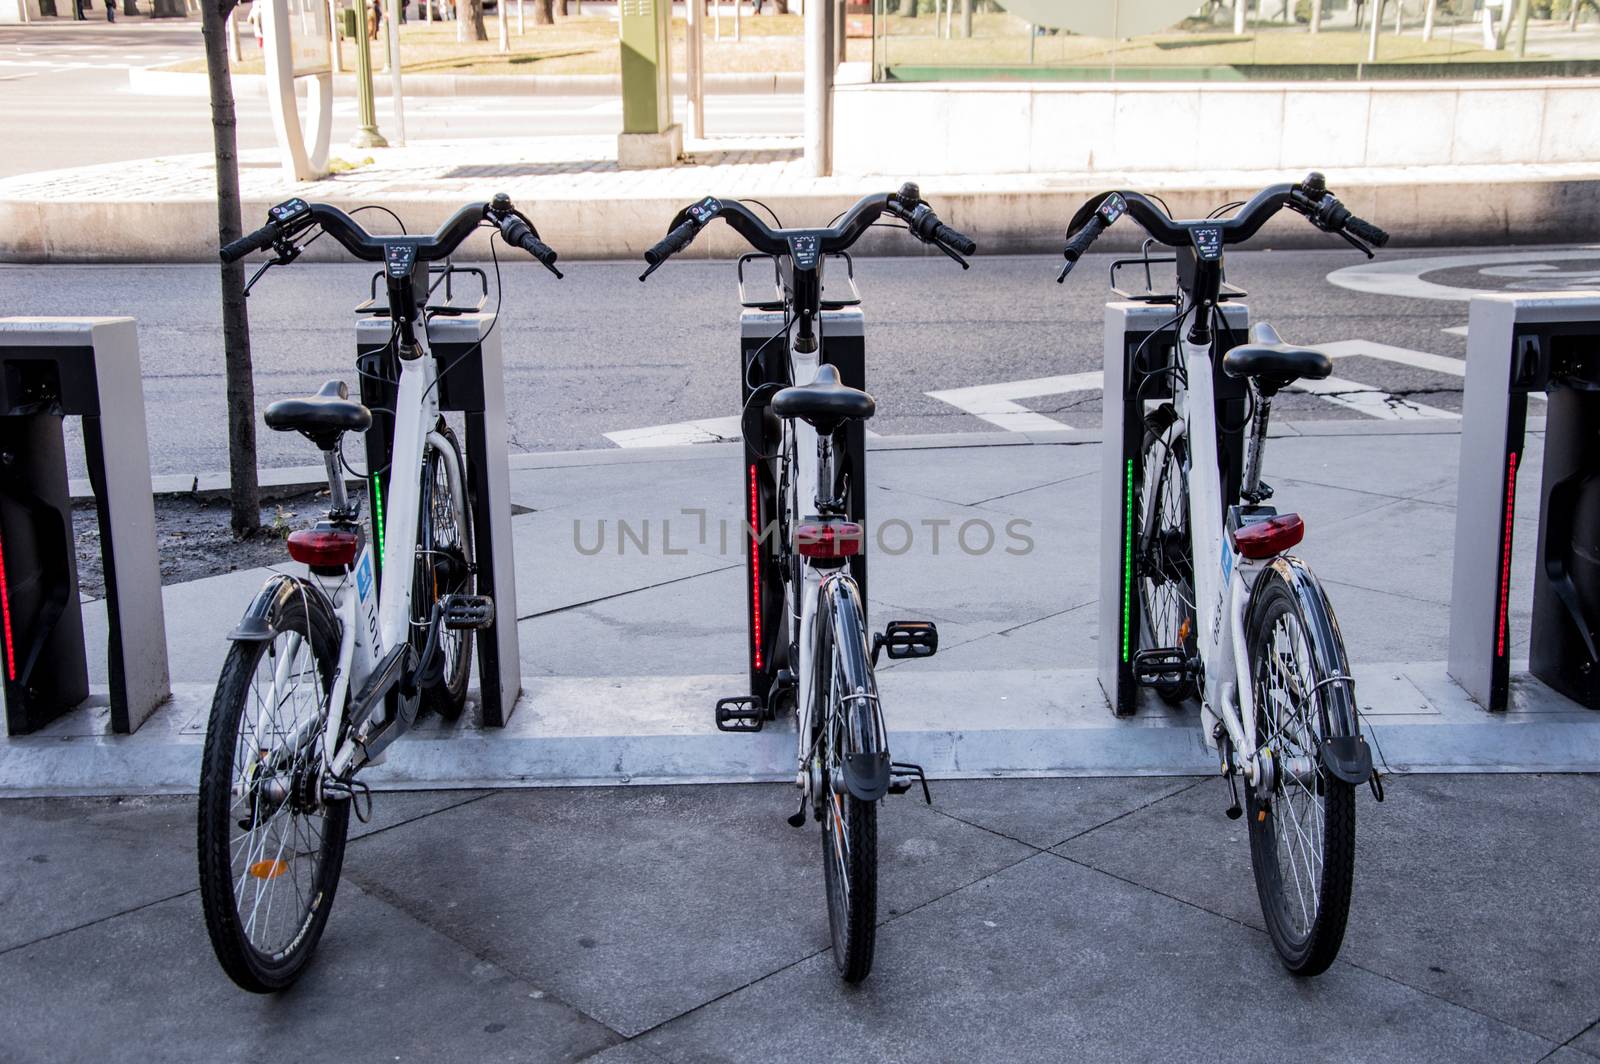 Three urban rental bikes parked